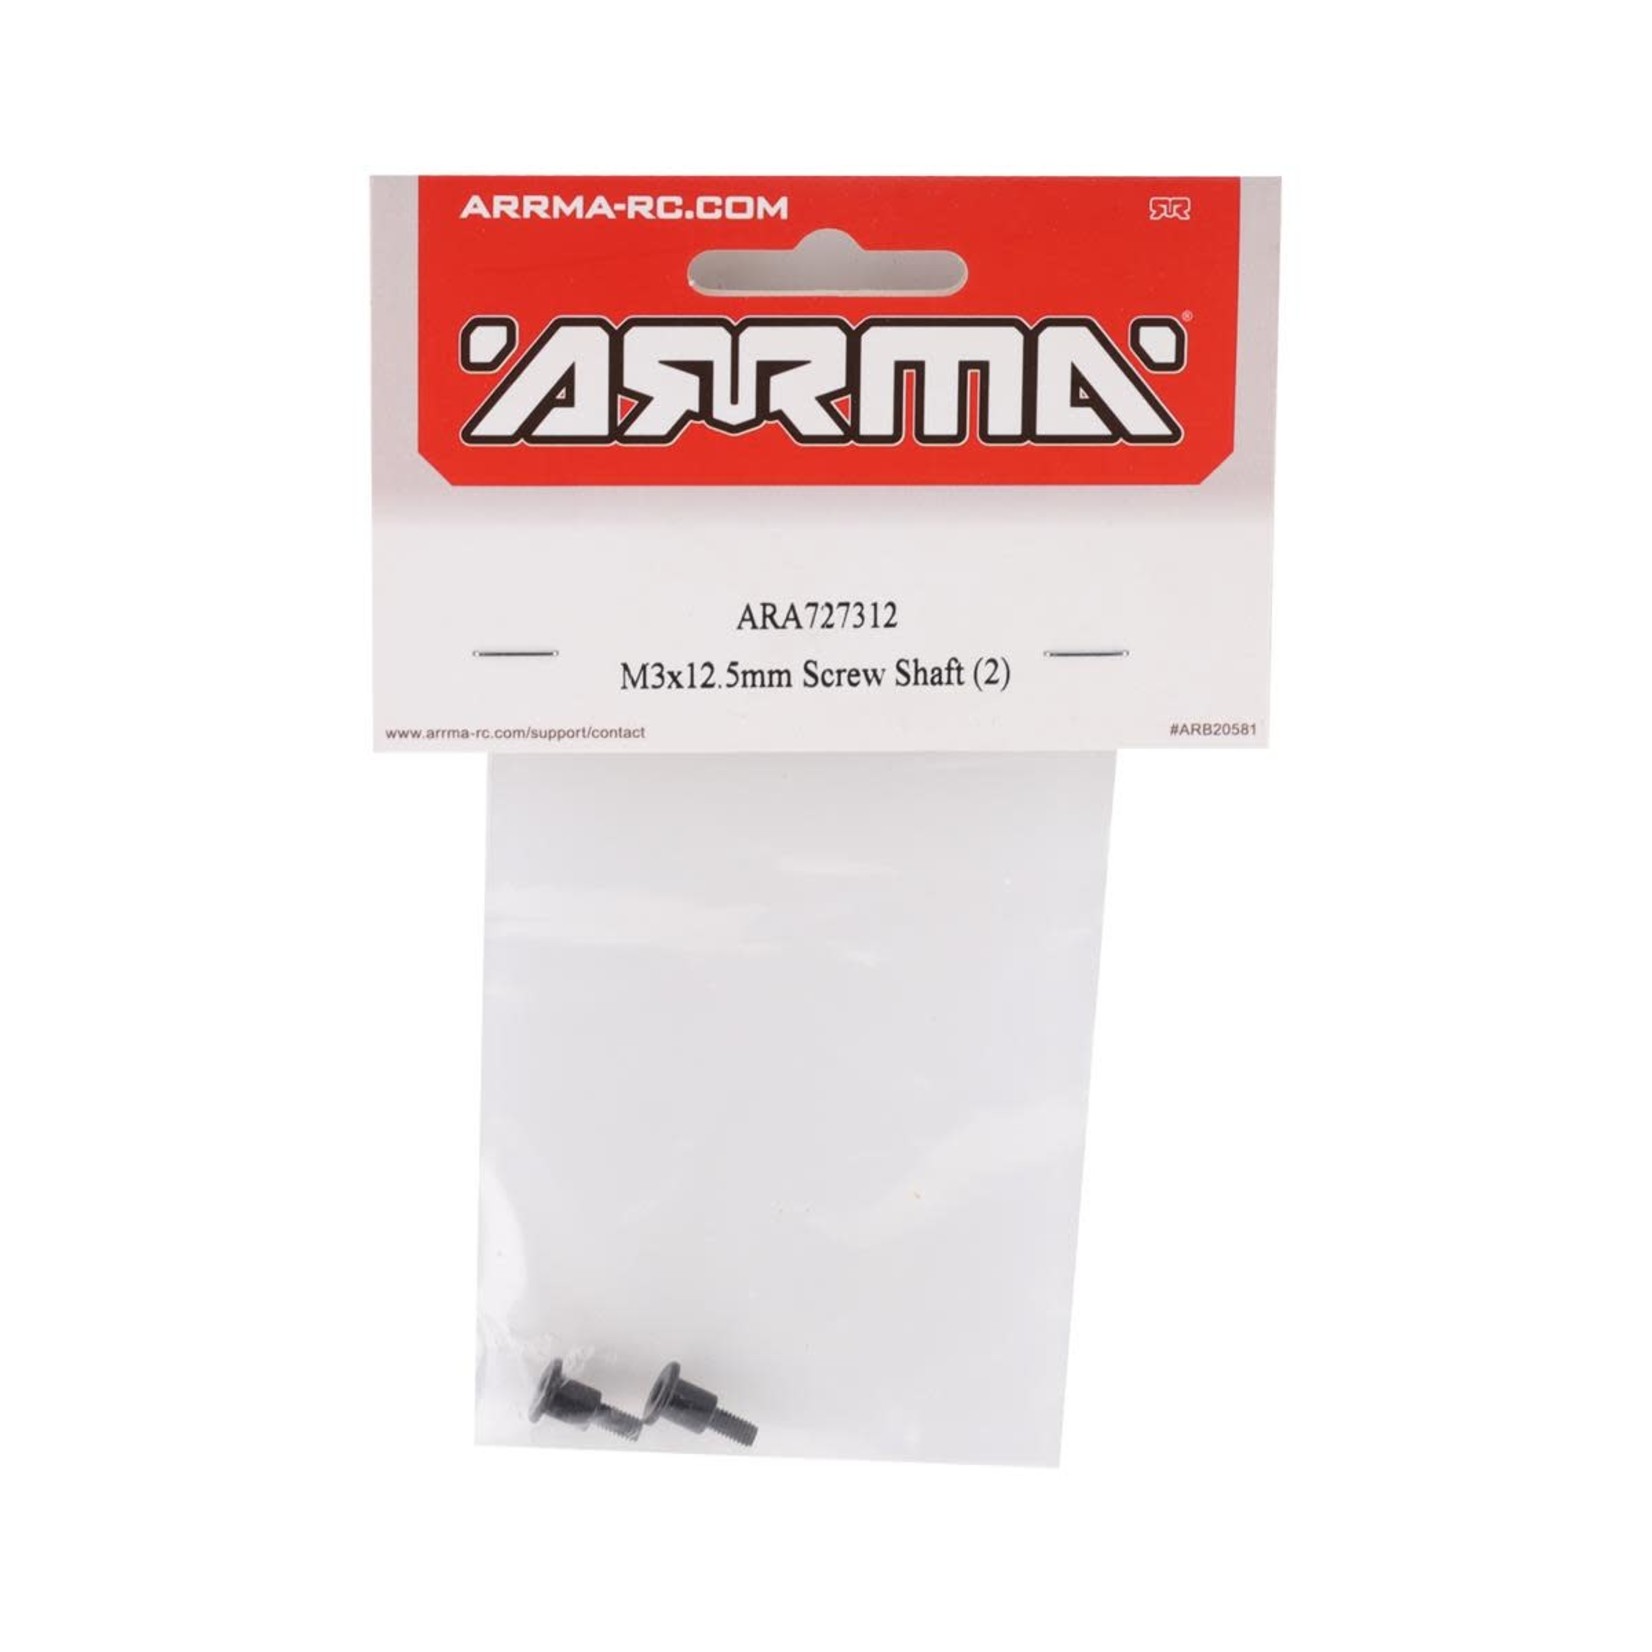 ARRMA Arrma 3x12.5mm Screw Shaft (2) #ARA727312